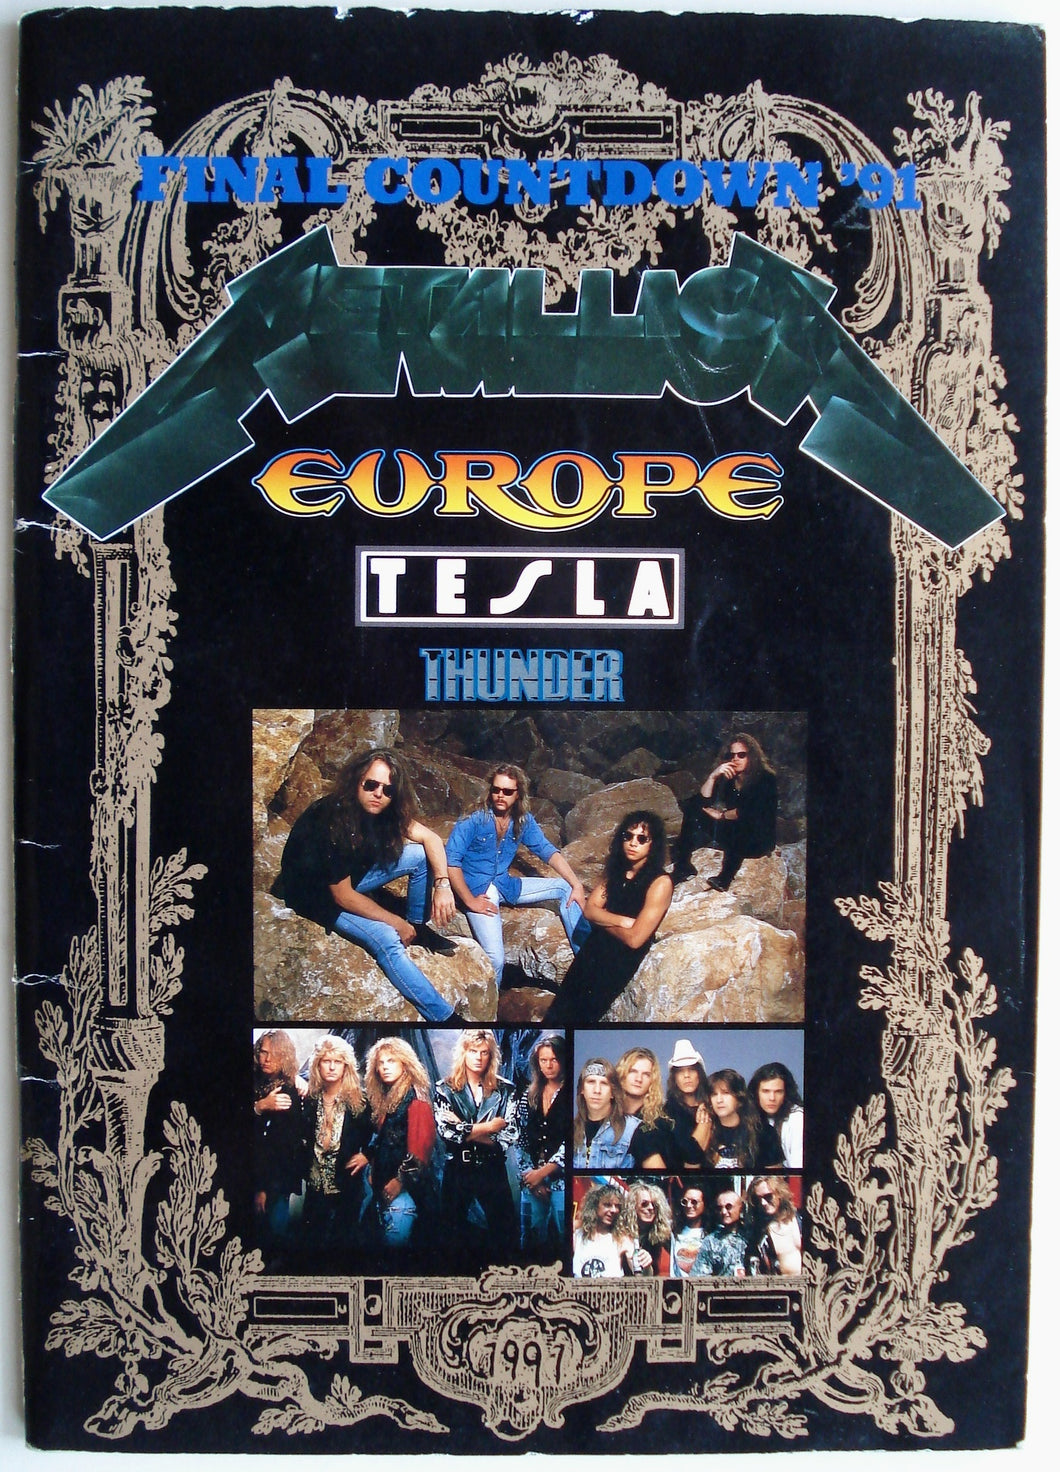 Metallica - Final Countdown '91